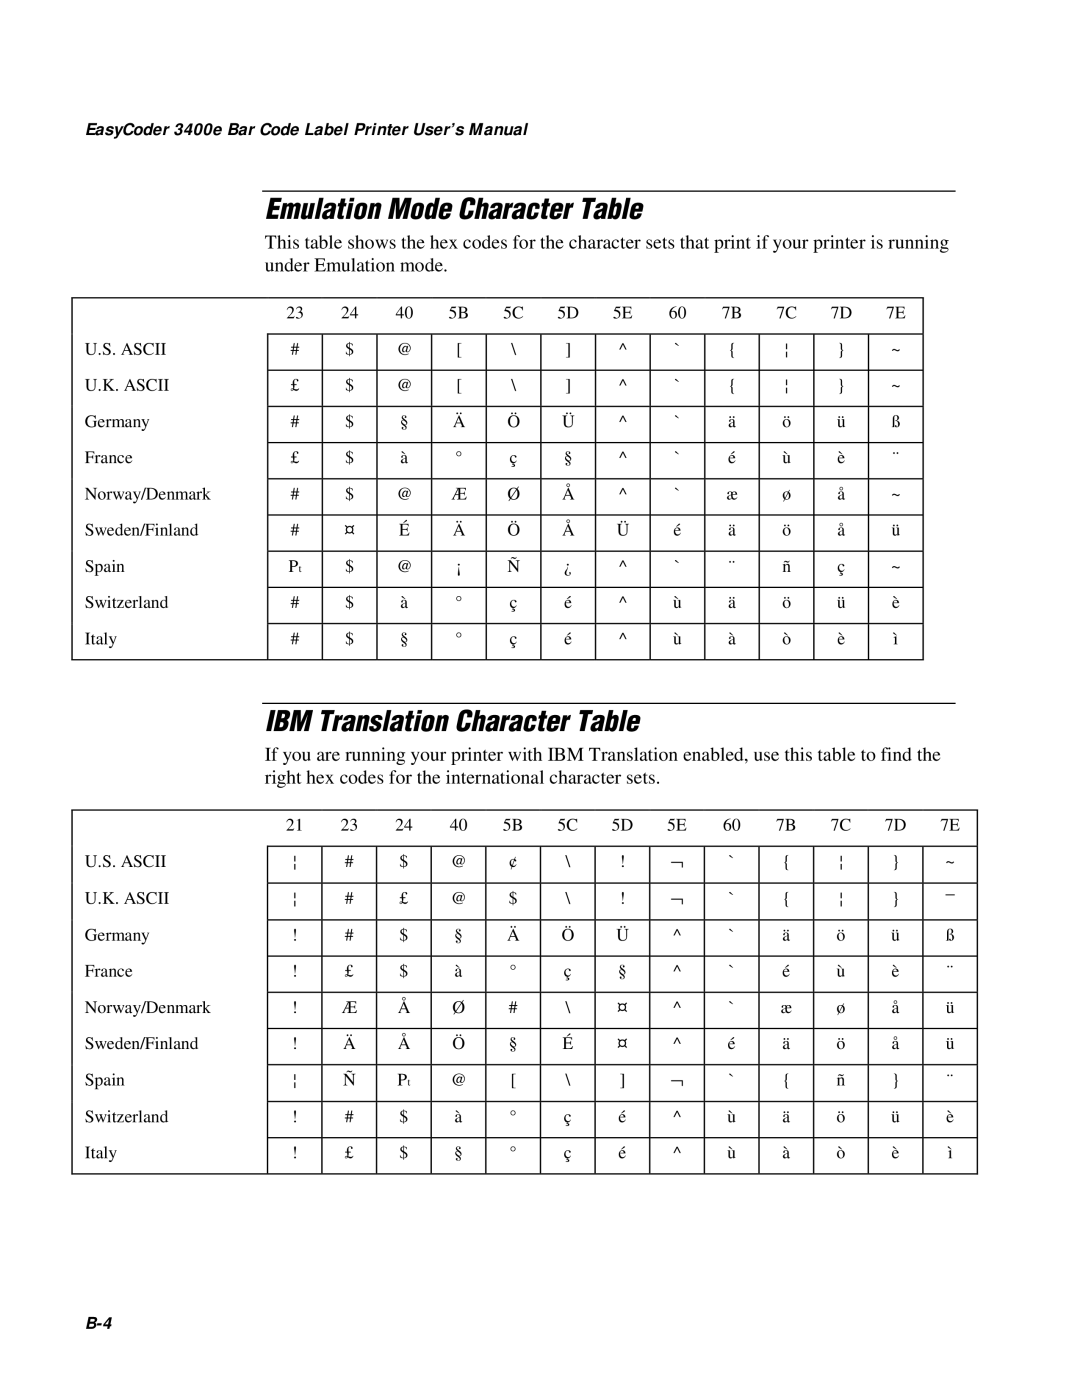 IBM EasyCoder 3400e user manual Emulation Mode Character Table, IBM Translation Character Table 